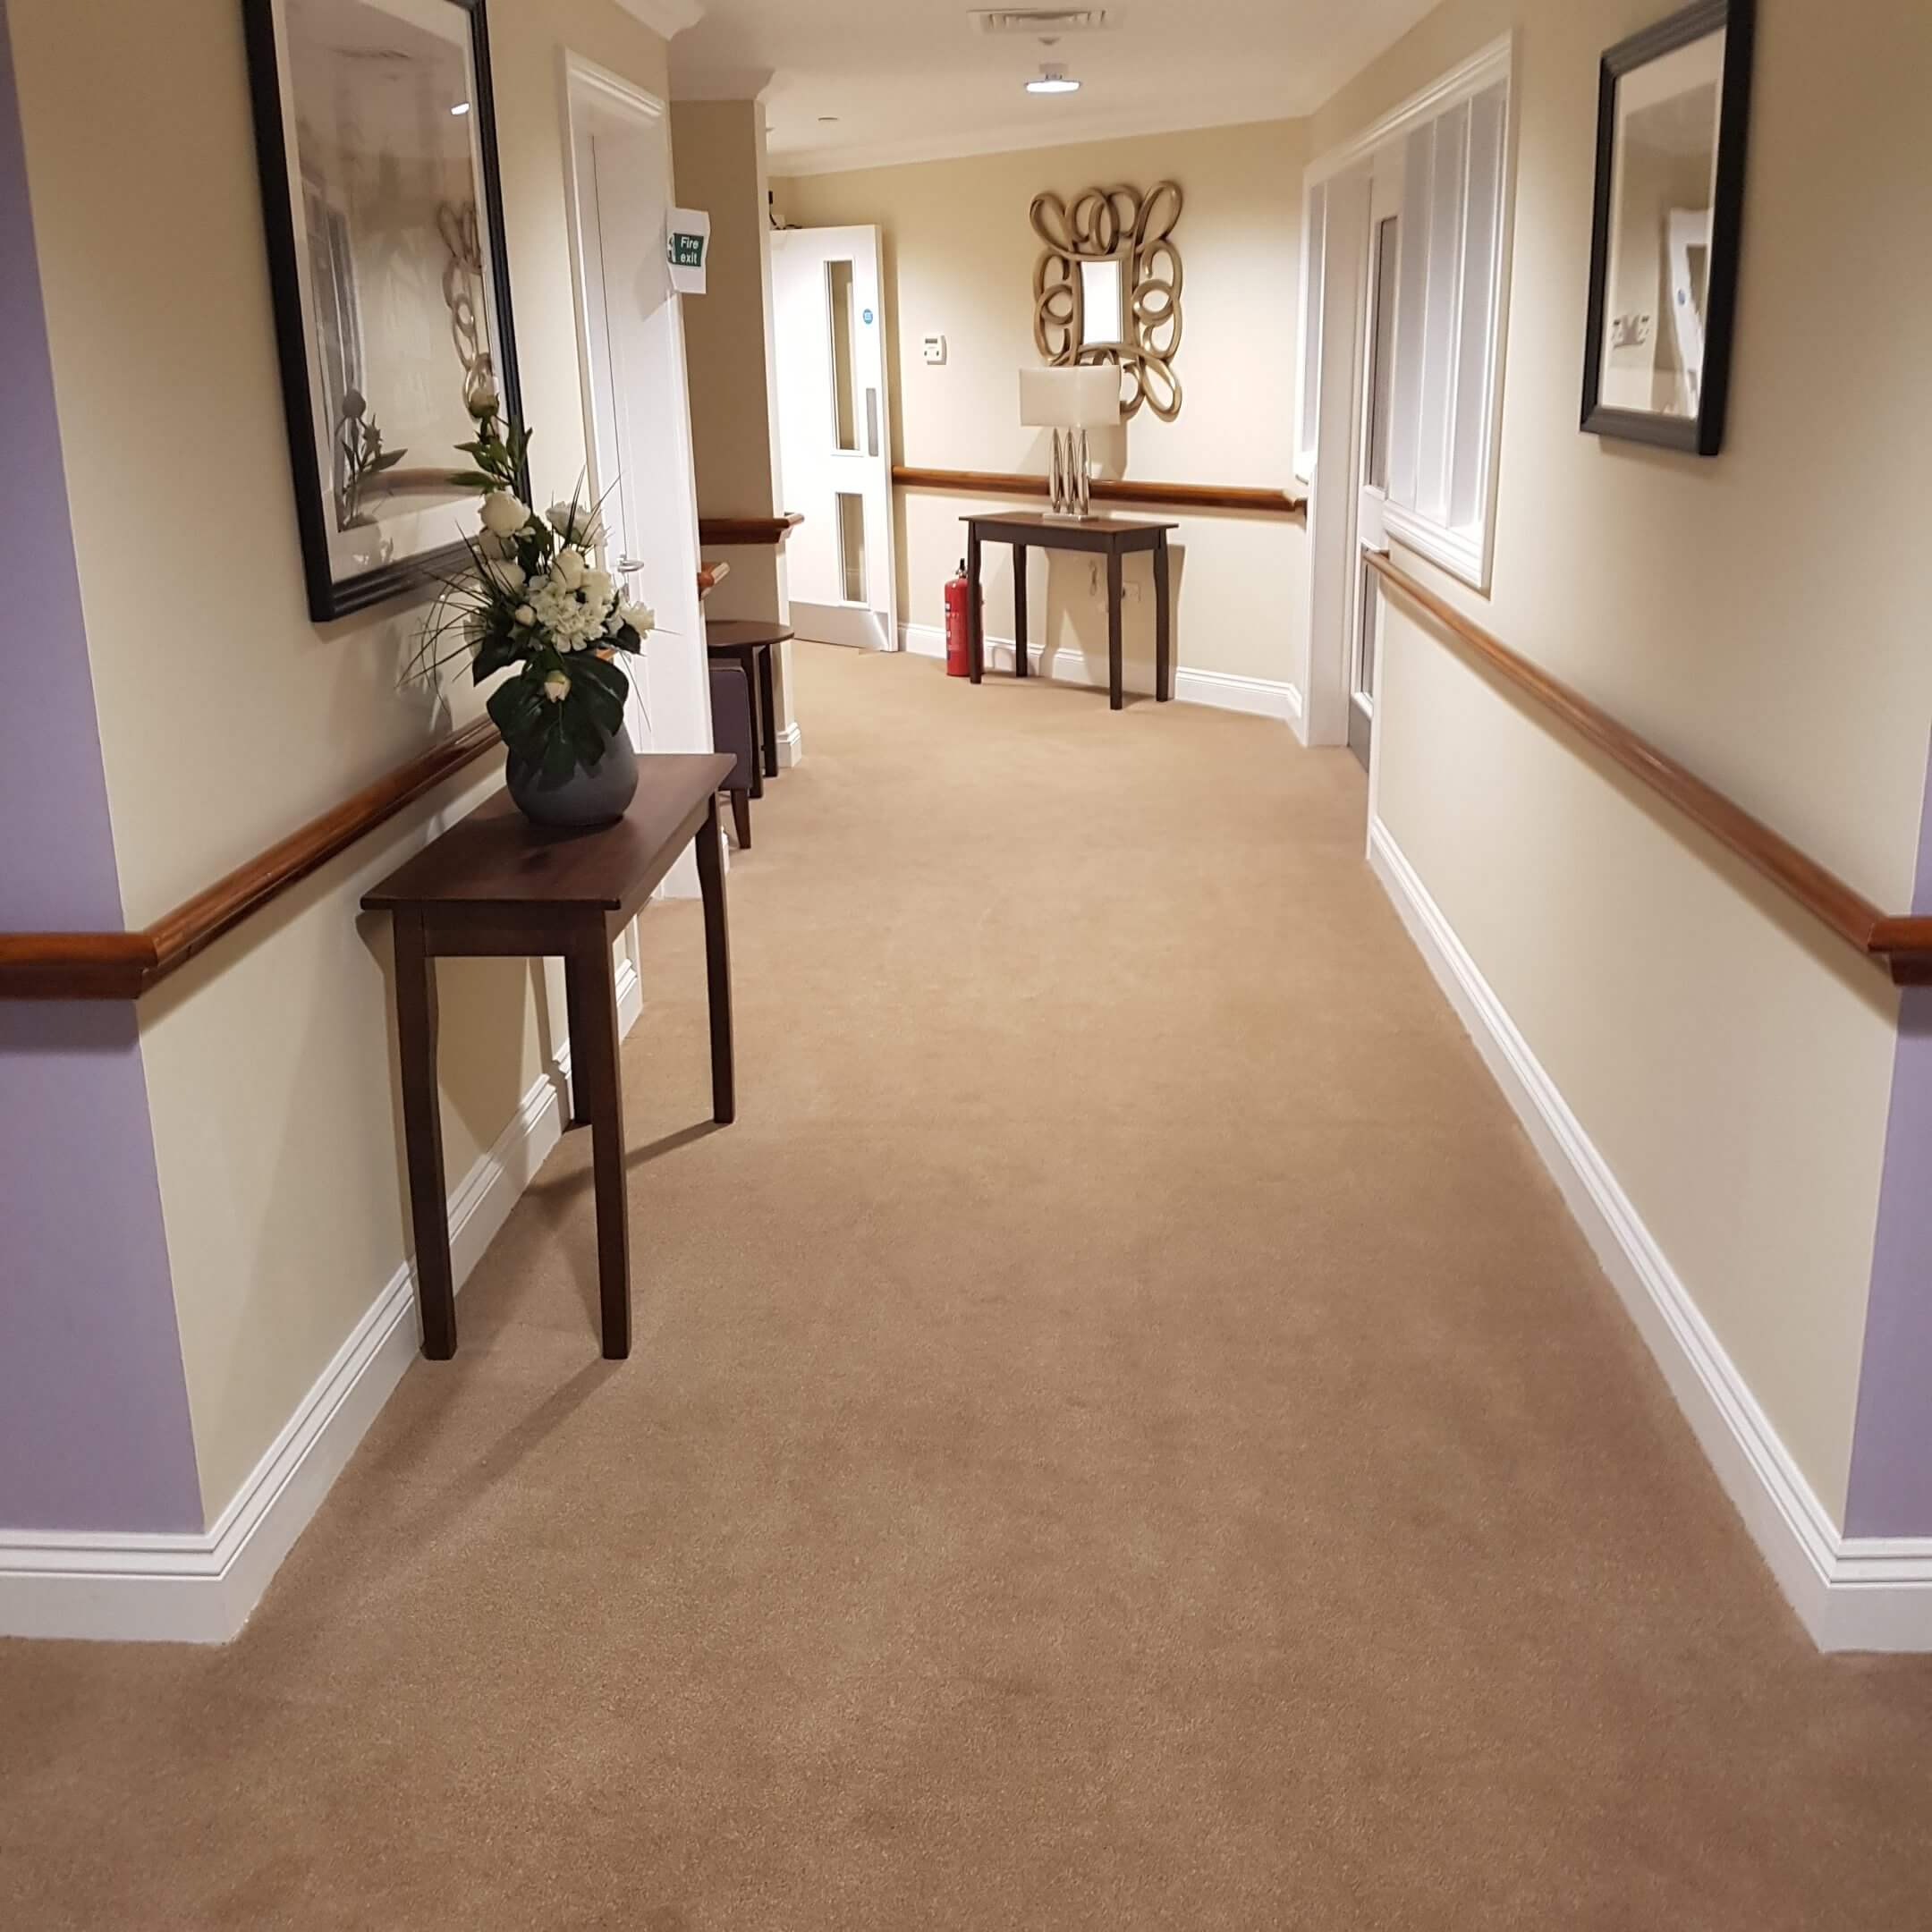 Care home corridor flooring